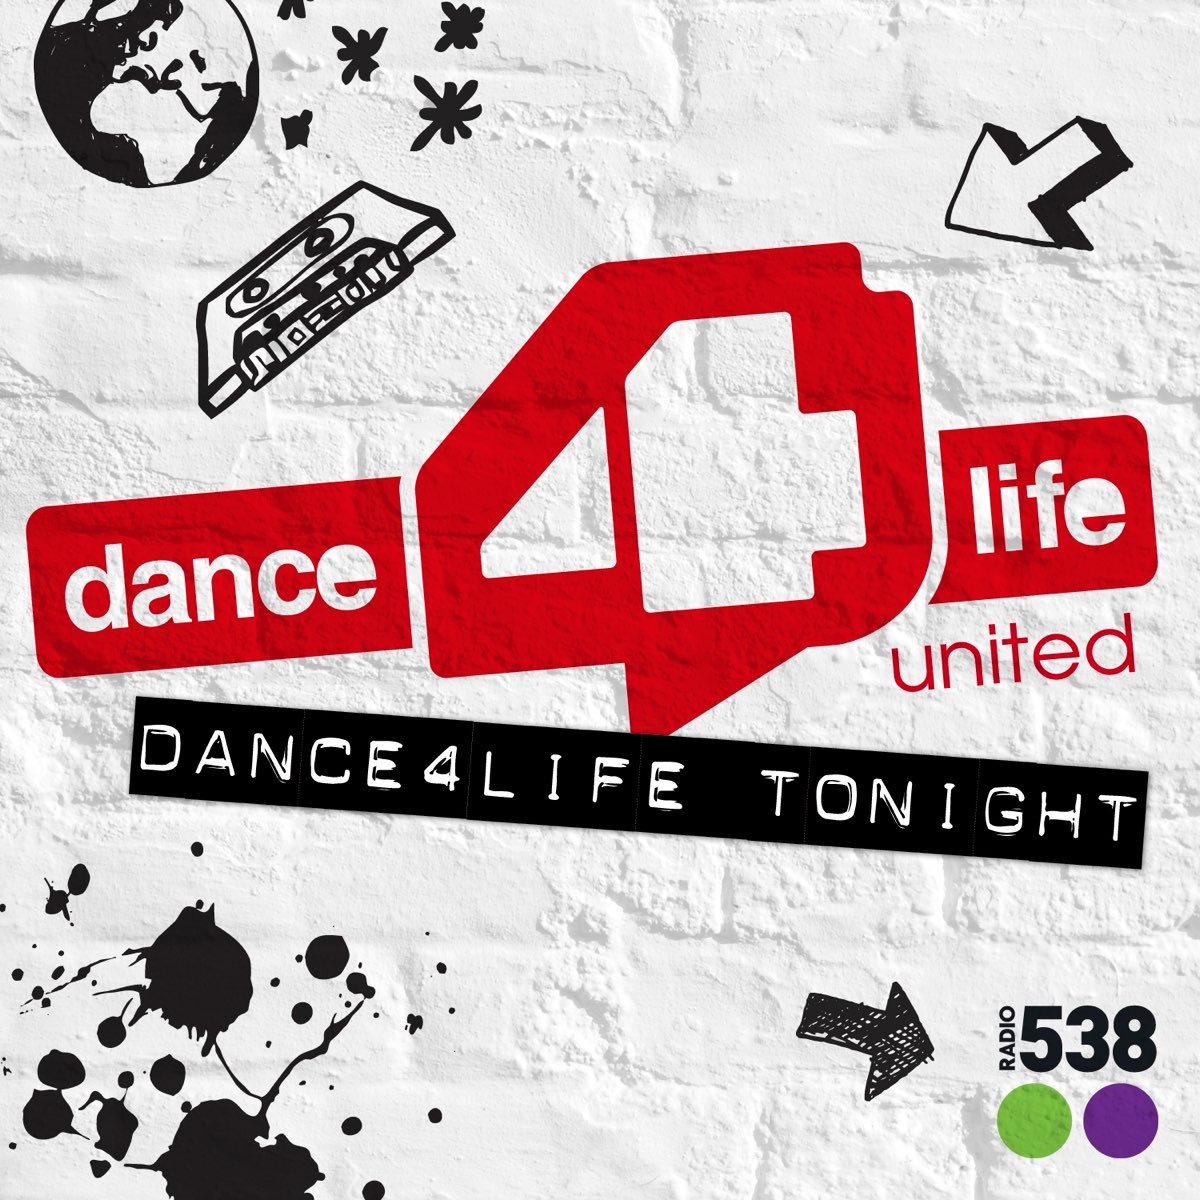 Dance 4 life